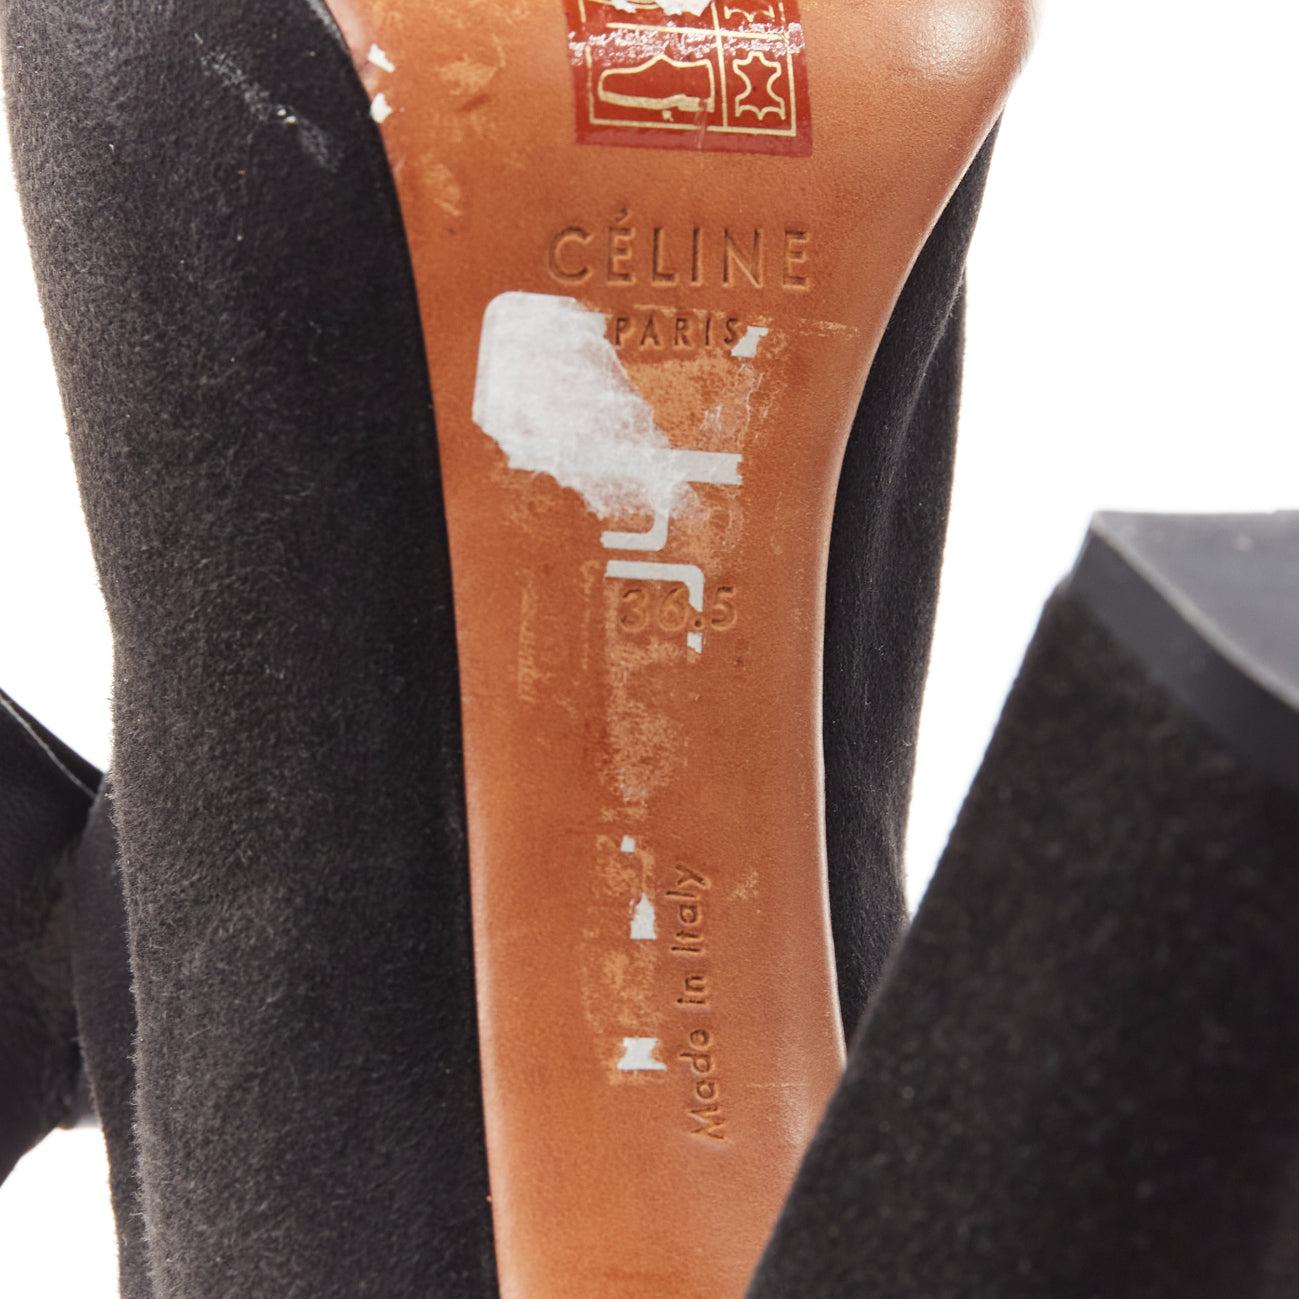 OLD CELINE Phoebe Philo black suede bow high heel mules EU36.5 For Sale 5